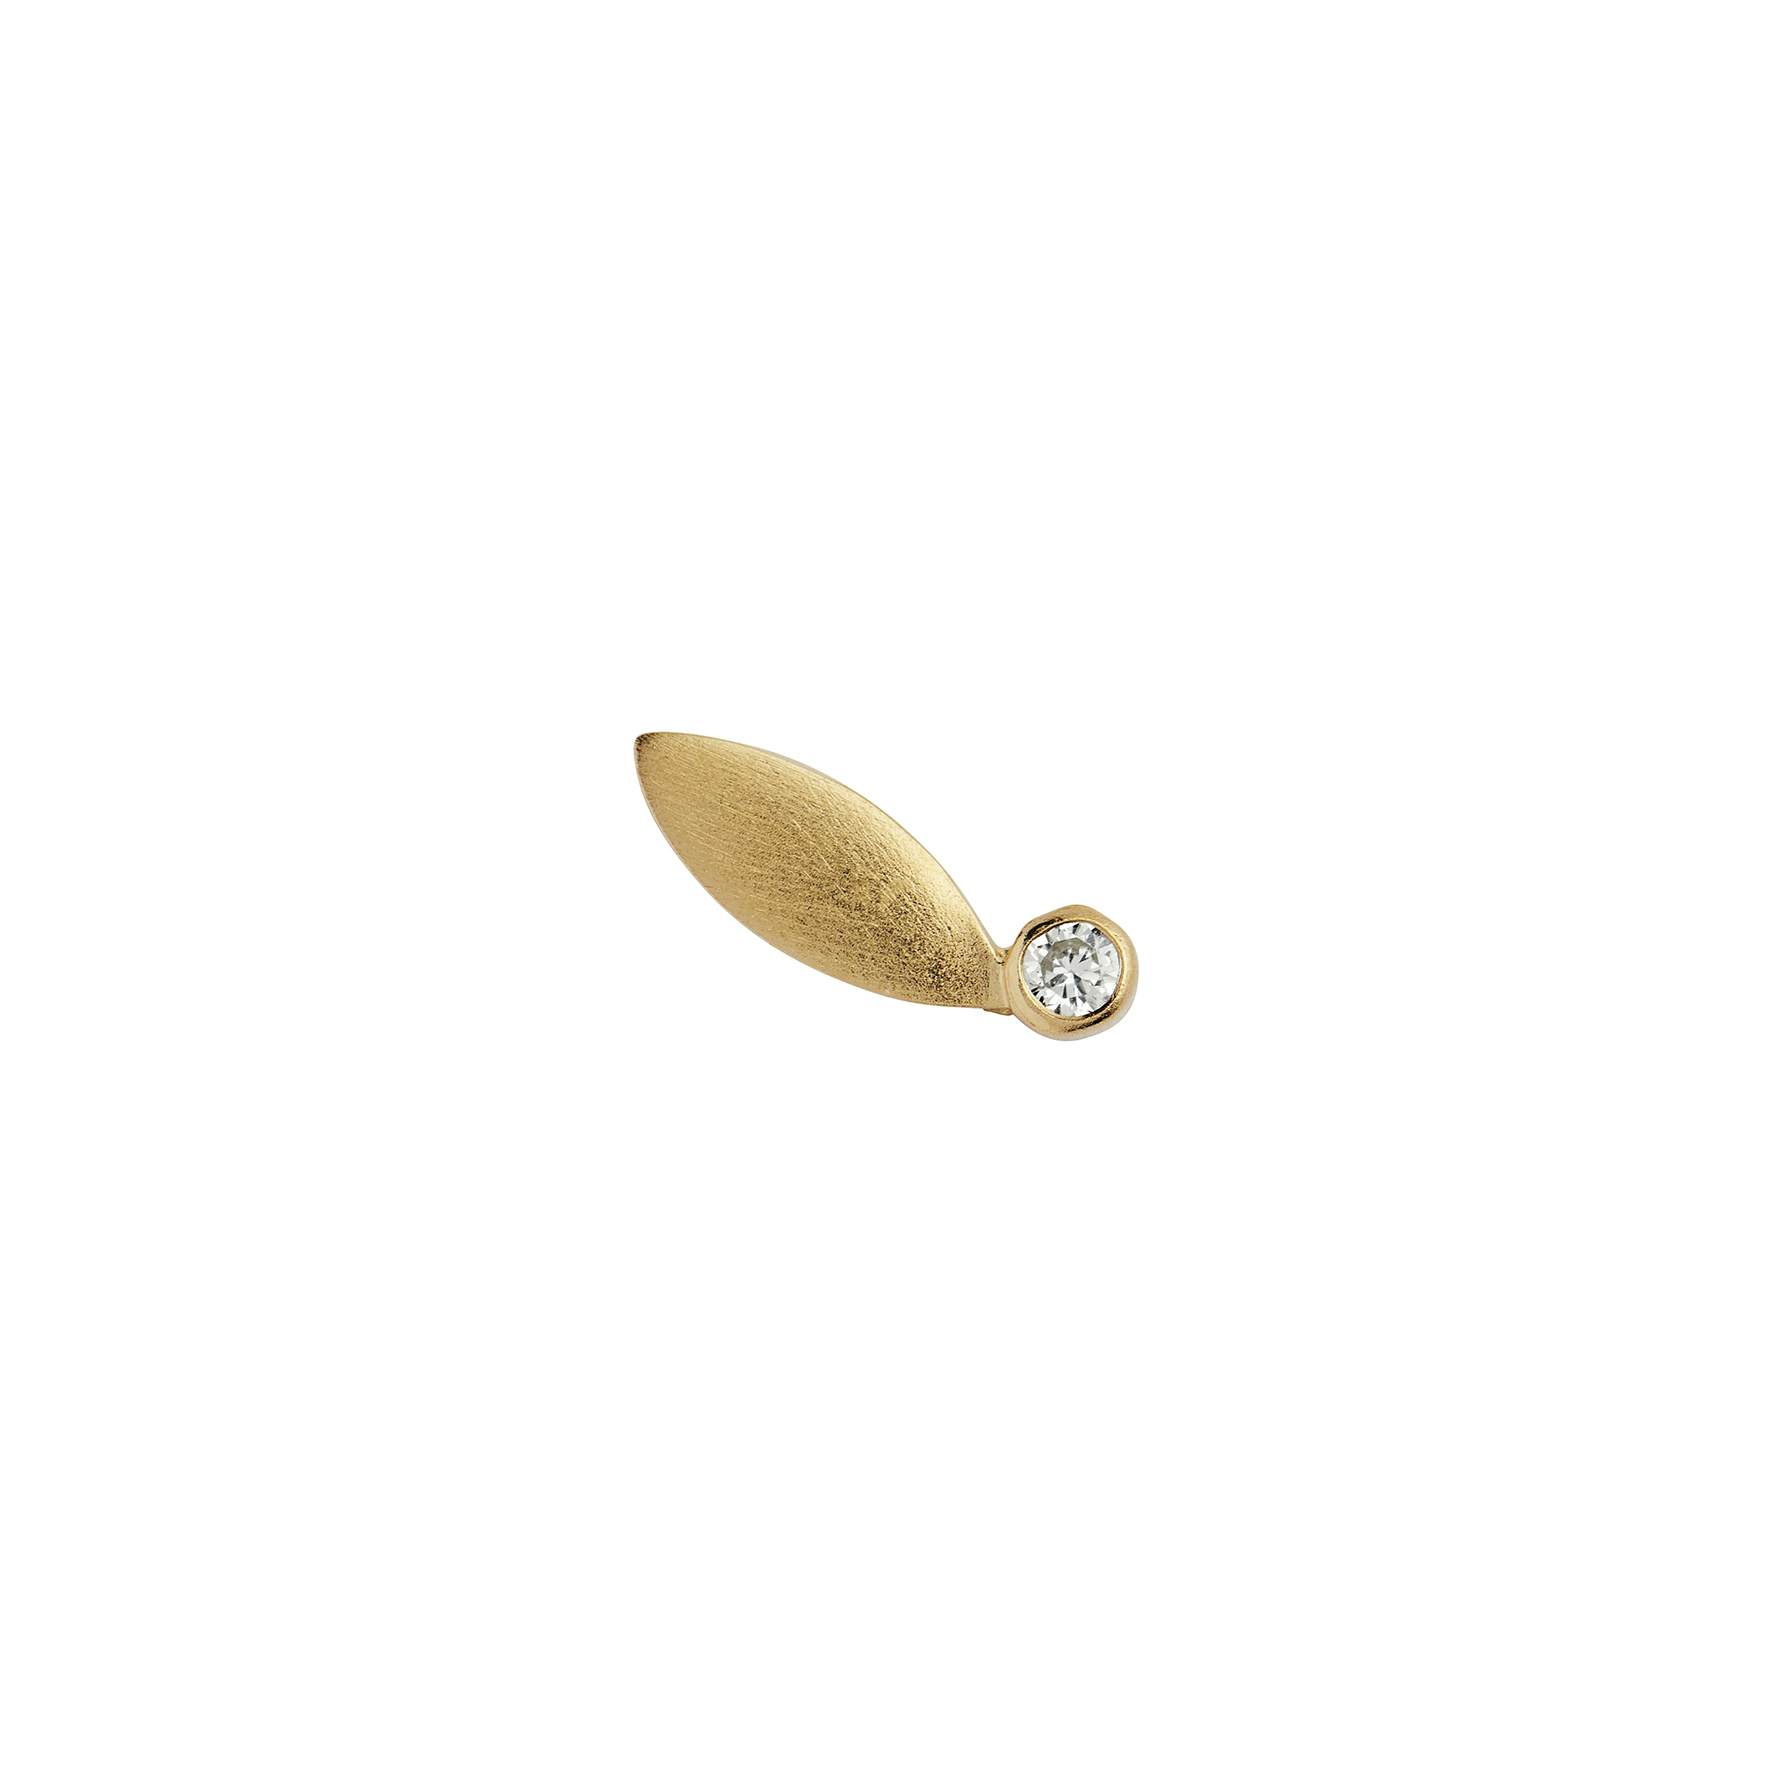 Big Dot Leaf Earstick Light Peridot von STINE A Jewelry in Vergoldet-Silber Sterling 925|